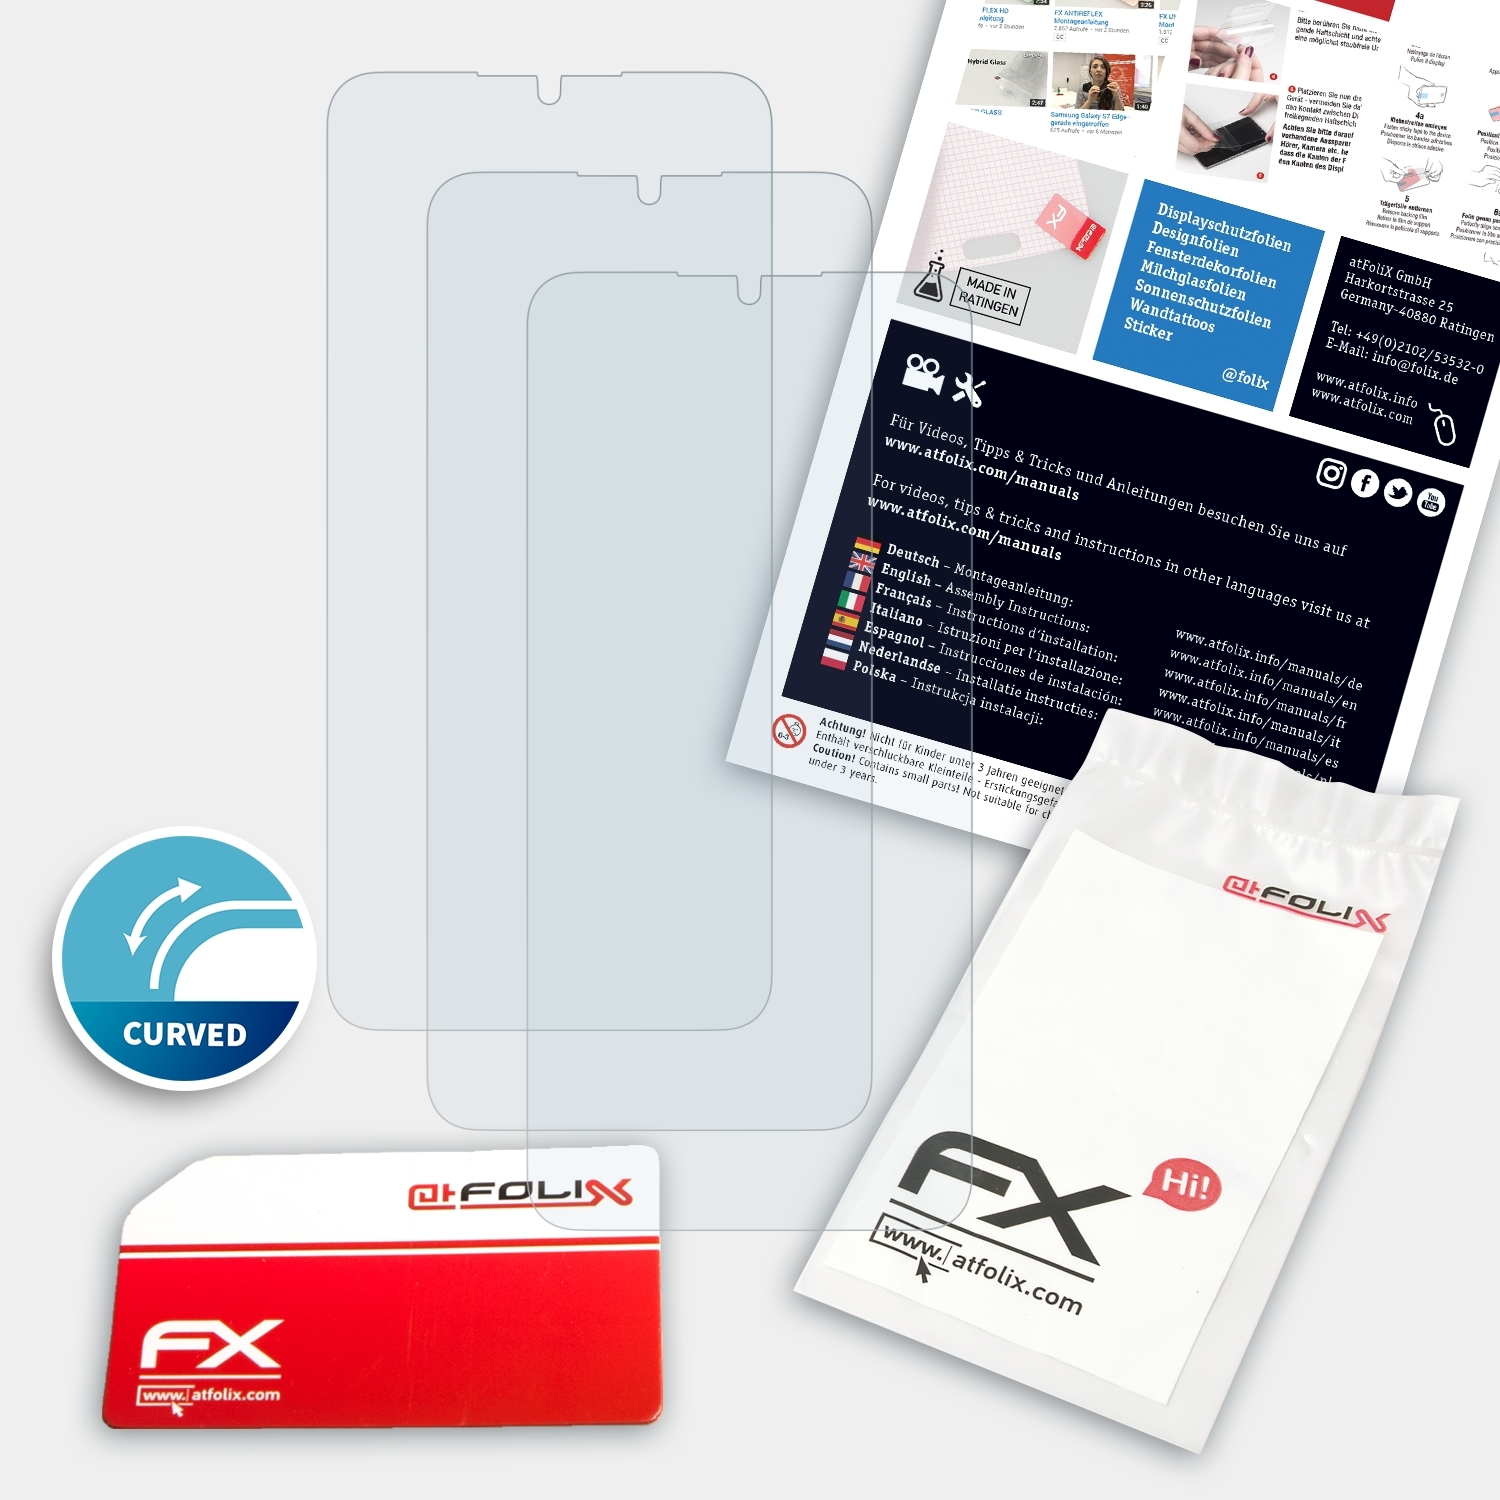 3x FX-ActiFleX Vivo S1) Displayschutz(für ATFOLIX